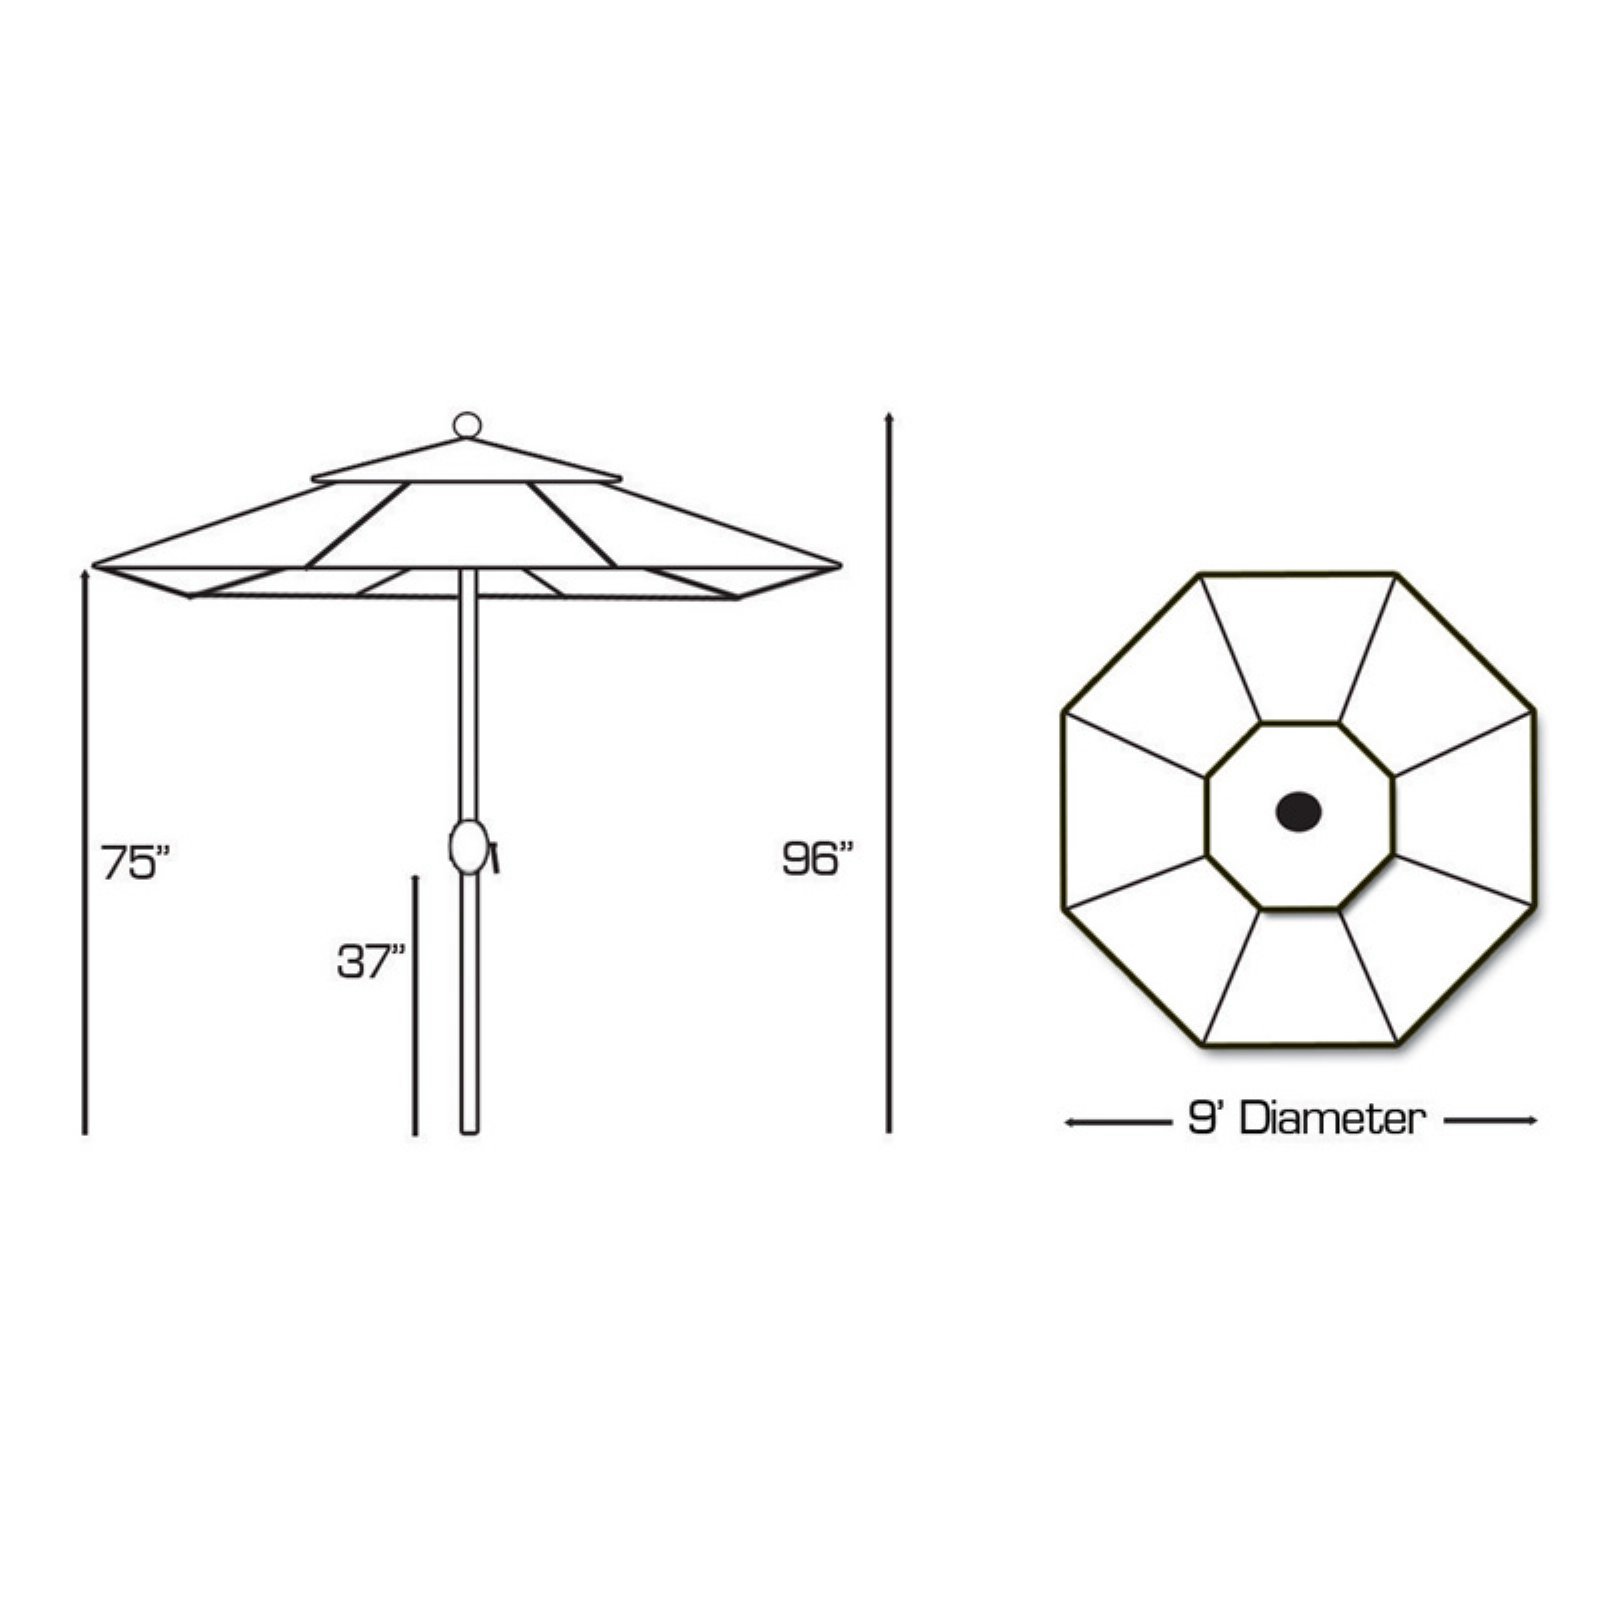 Galtech 9-ft. Aluminum Tilt Sunbrella Patio Umbrella - image 5 of 7